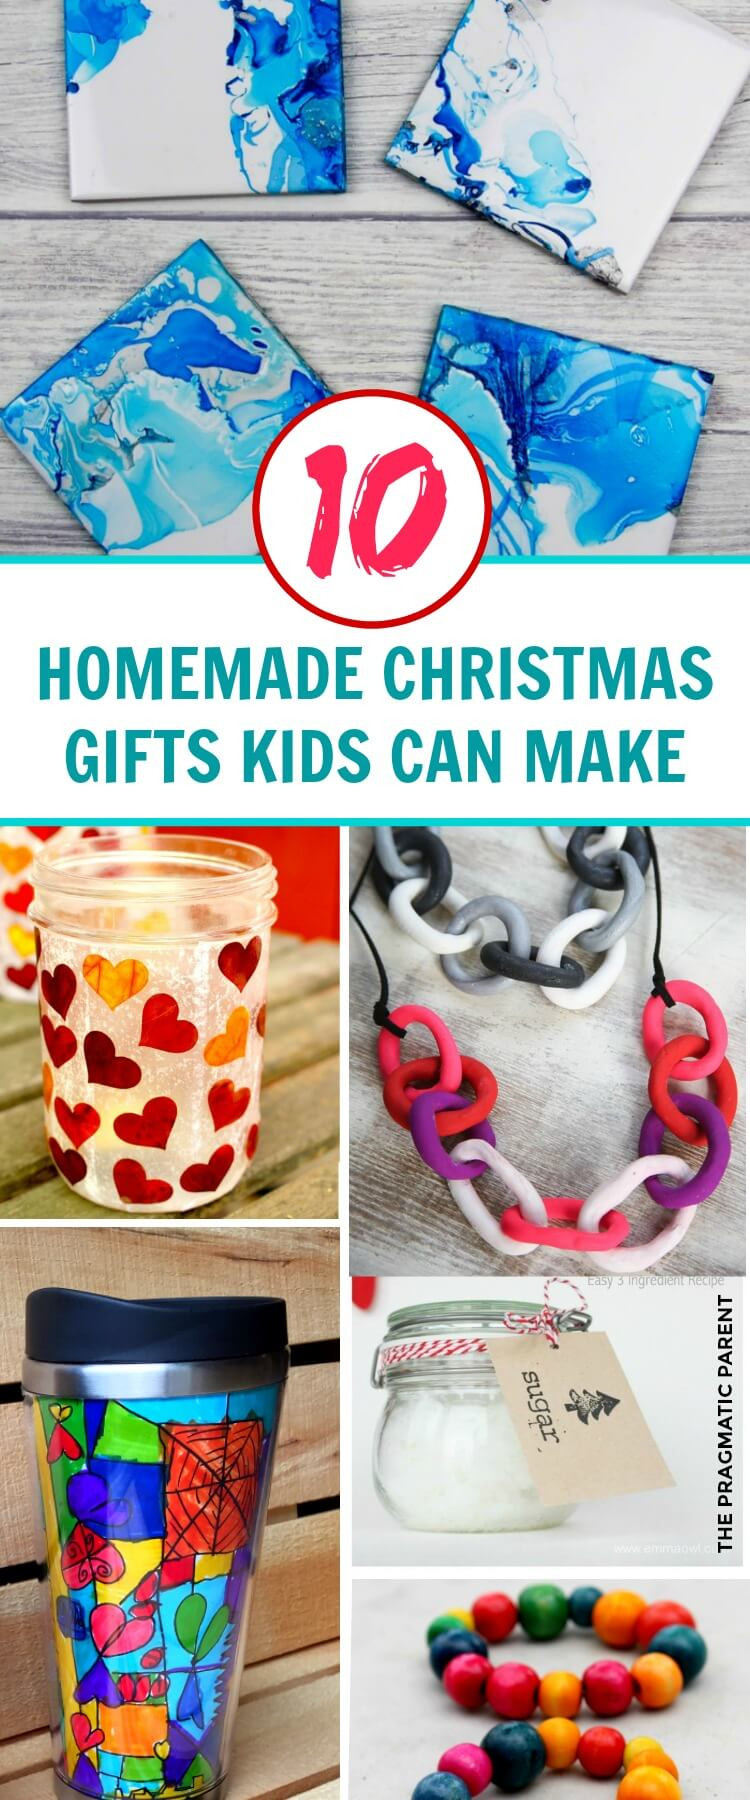 DIY Gifts For Kids To Make
 10 Beautiful Homemade Christmas Gifts Kids Can Make